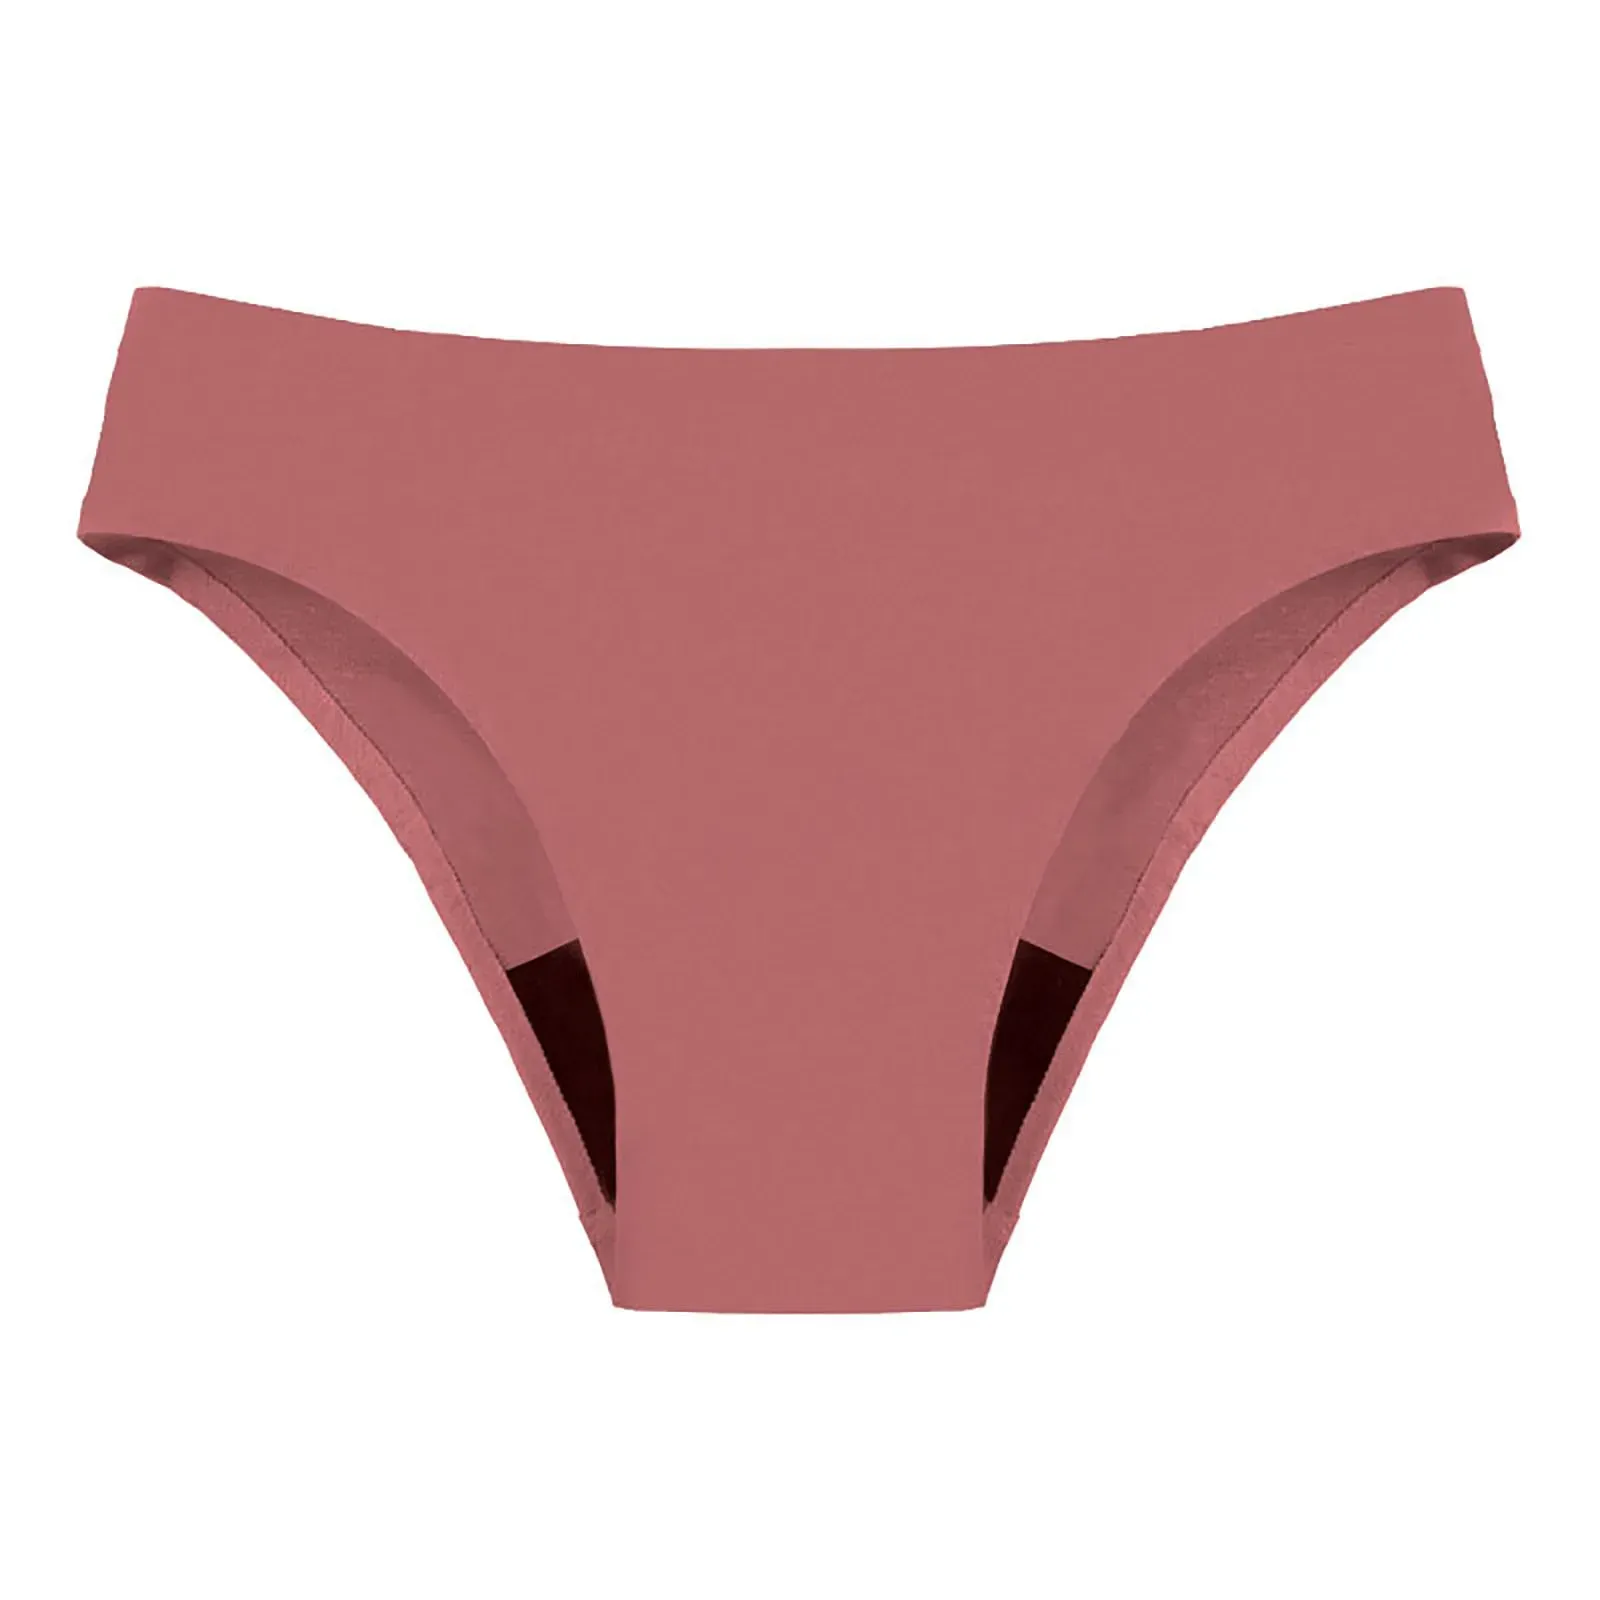 Separates Women'S Solid Low Waist Basic Swimming Trunks For Teenagers Menstrual Leakproof Bikini Bottom Absorbent Pants Swimwear Beach